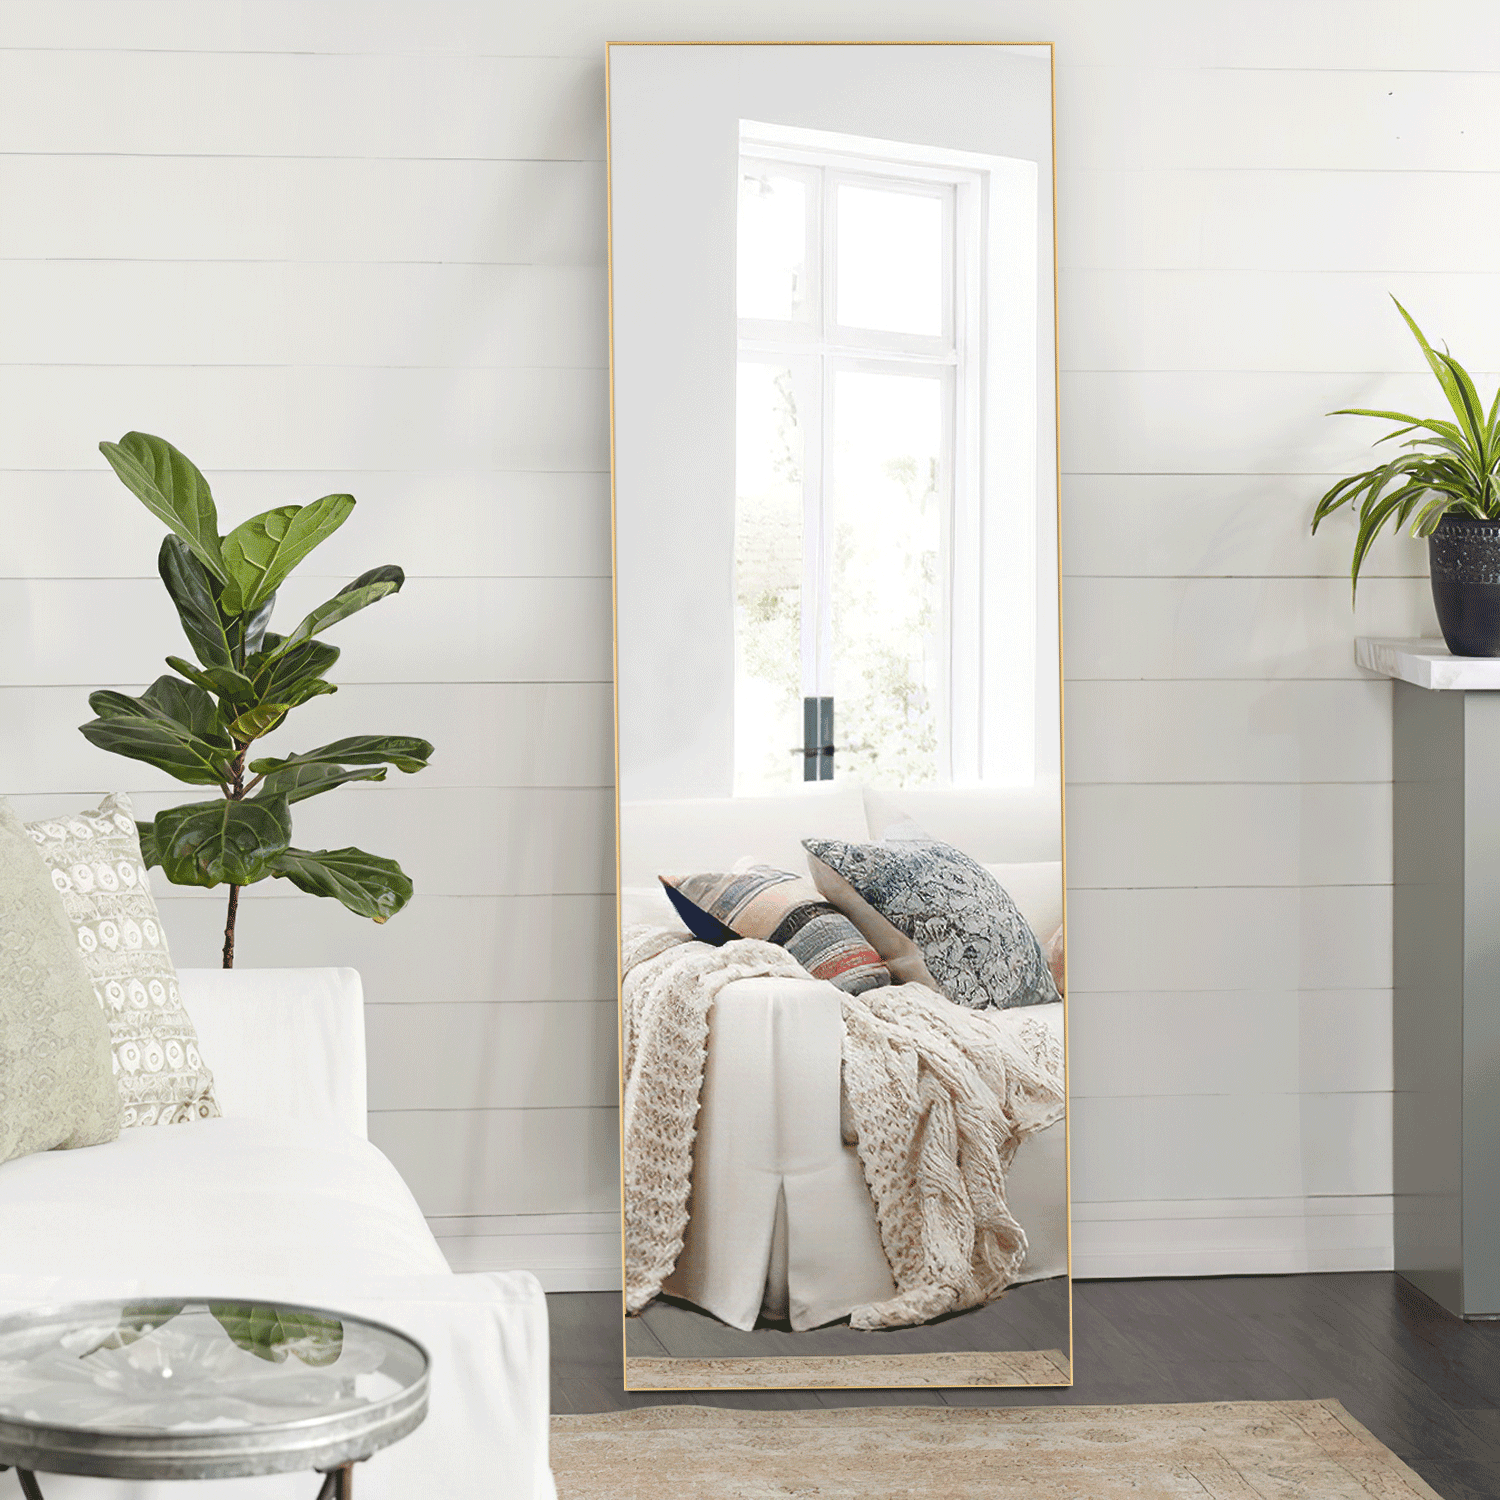 Neutype Full Length Mirror Decor Wall, Full Length Mirror In Living Room Ideas